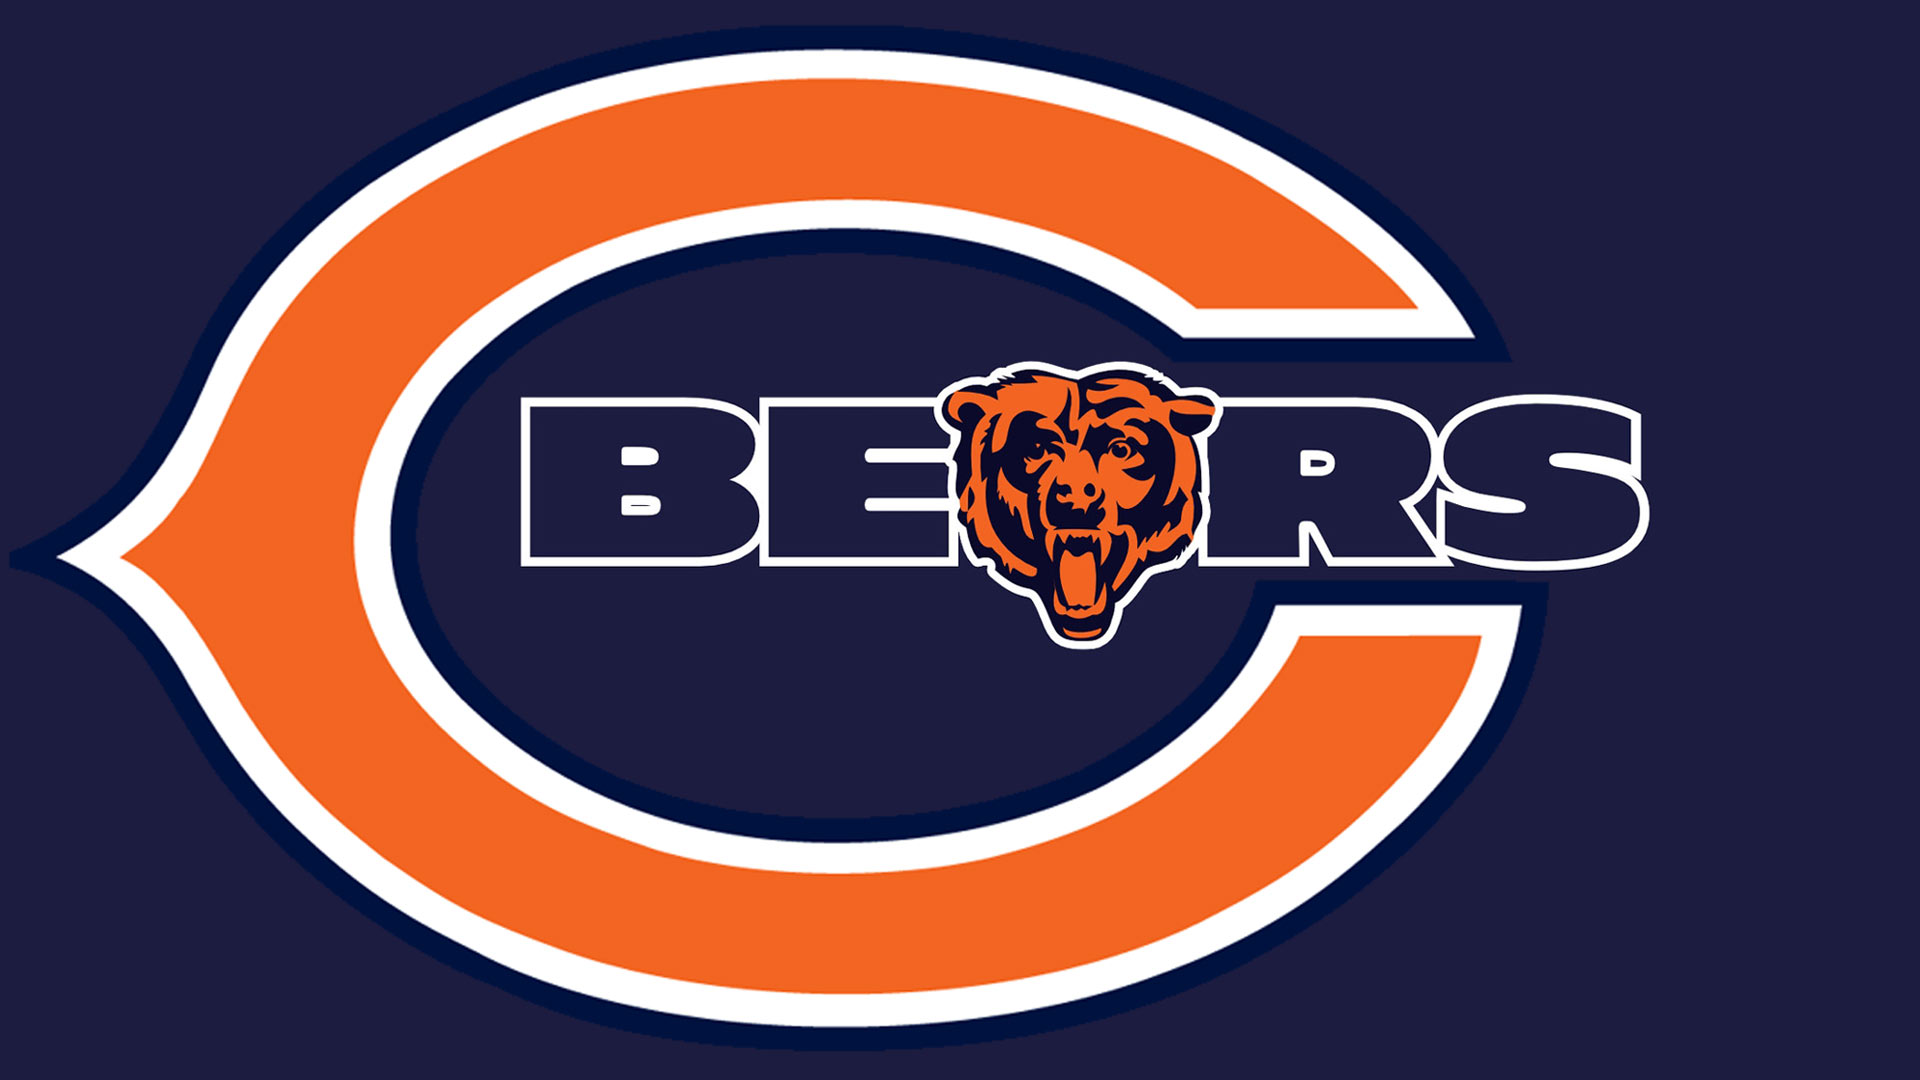 Download Chicago Bears logo Hd 1080p Wallpaper screen size 1920X1080 1920x1080